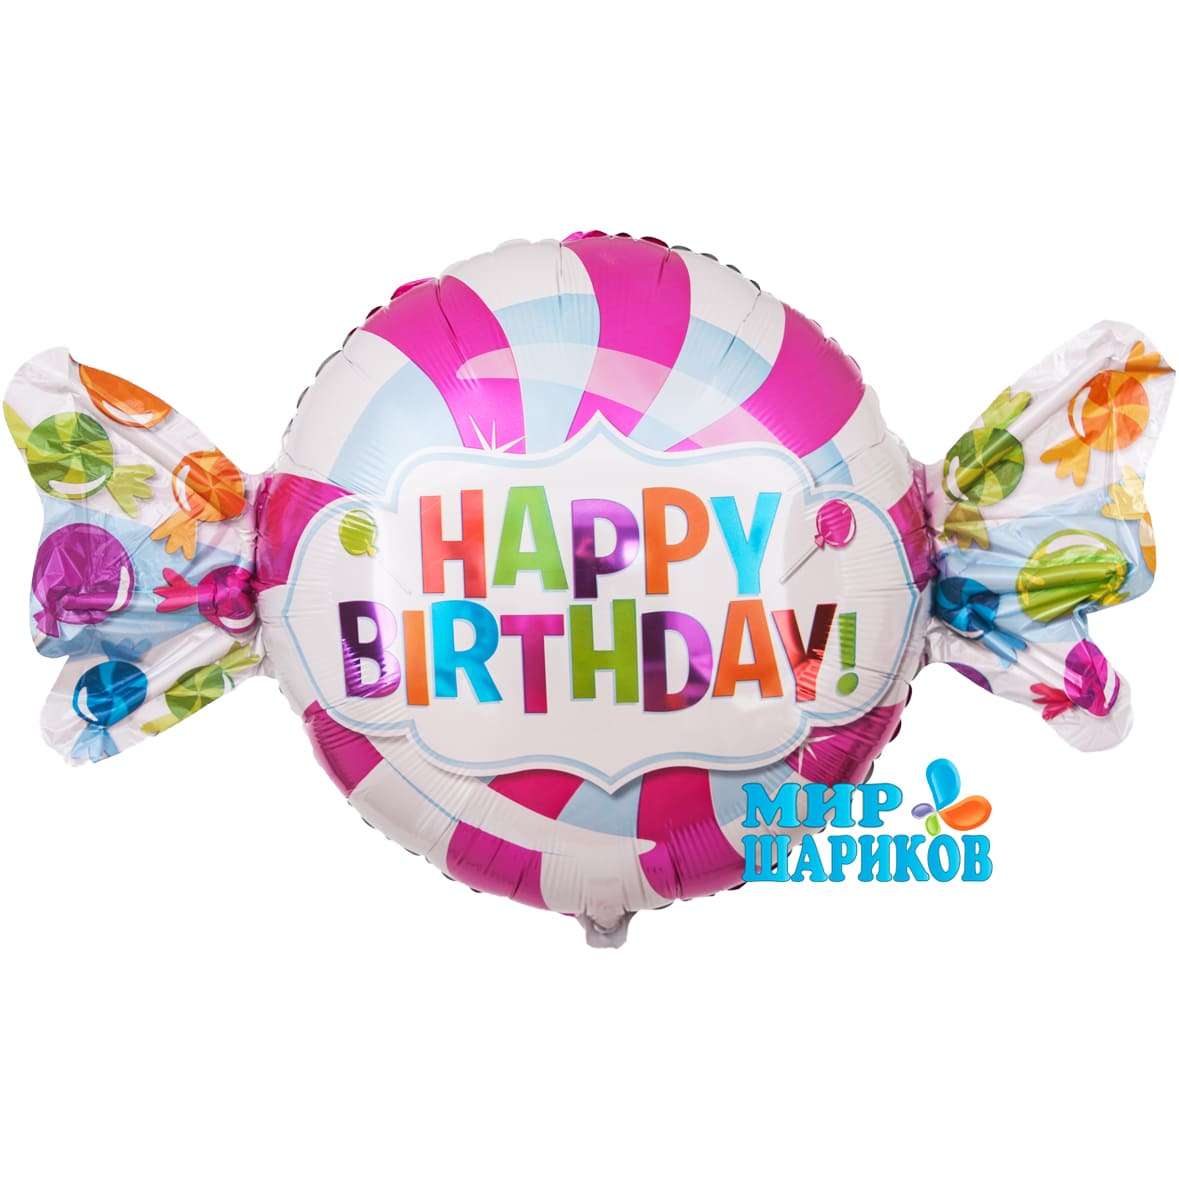 Конфетка Happy Birthday шарик из фольги с гелием картинка 3